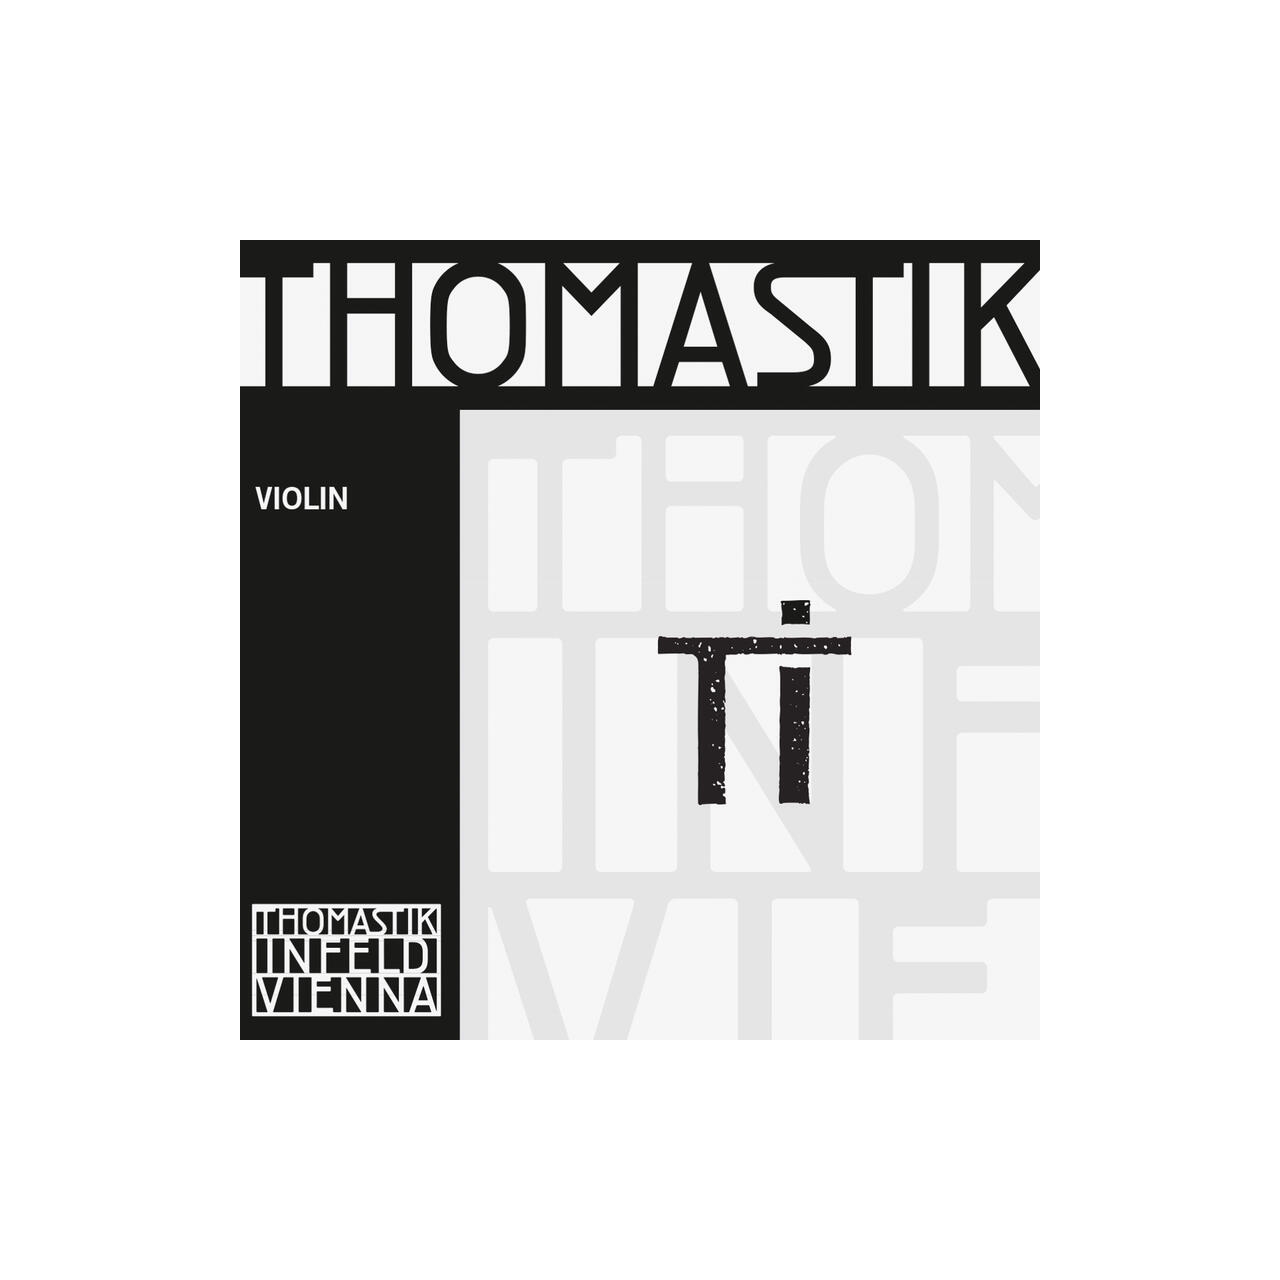 Thomastik Violin TI A 12er-Rohr (nur für Geigenbau)